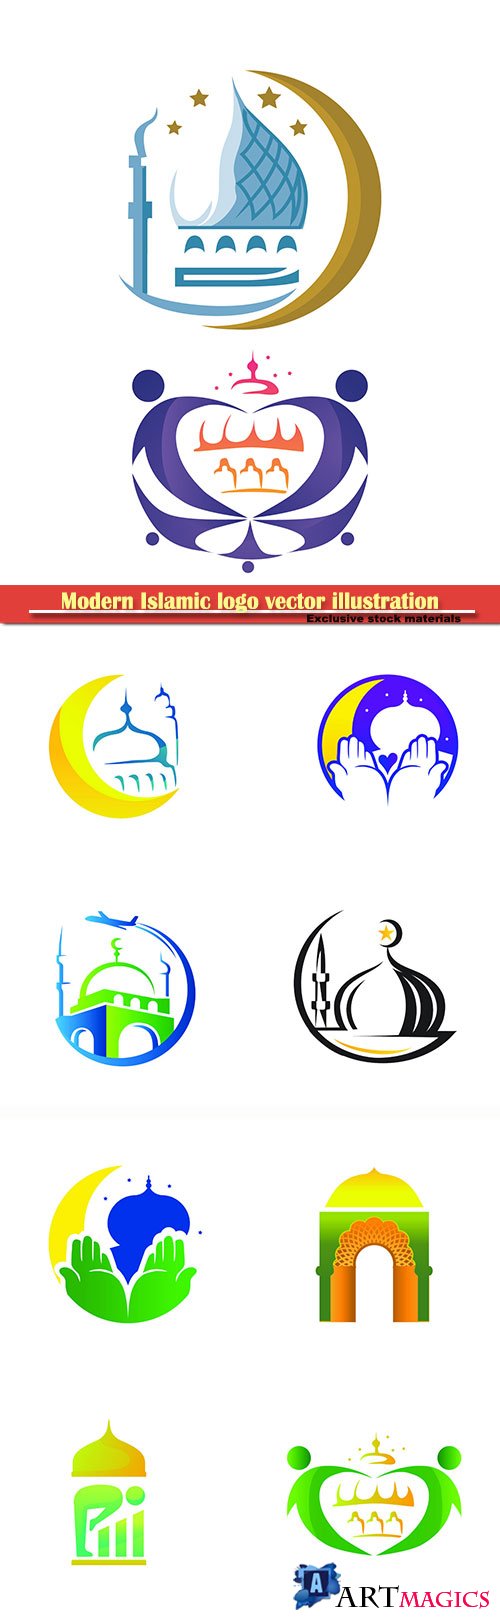 Modern Islamic logo vector illustration